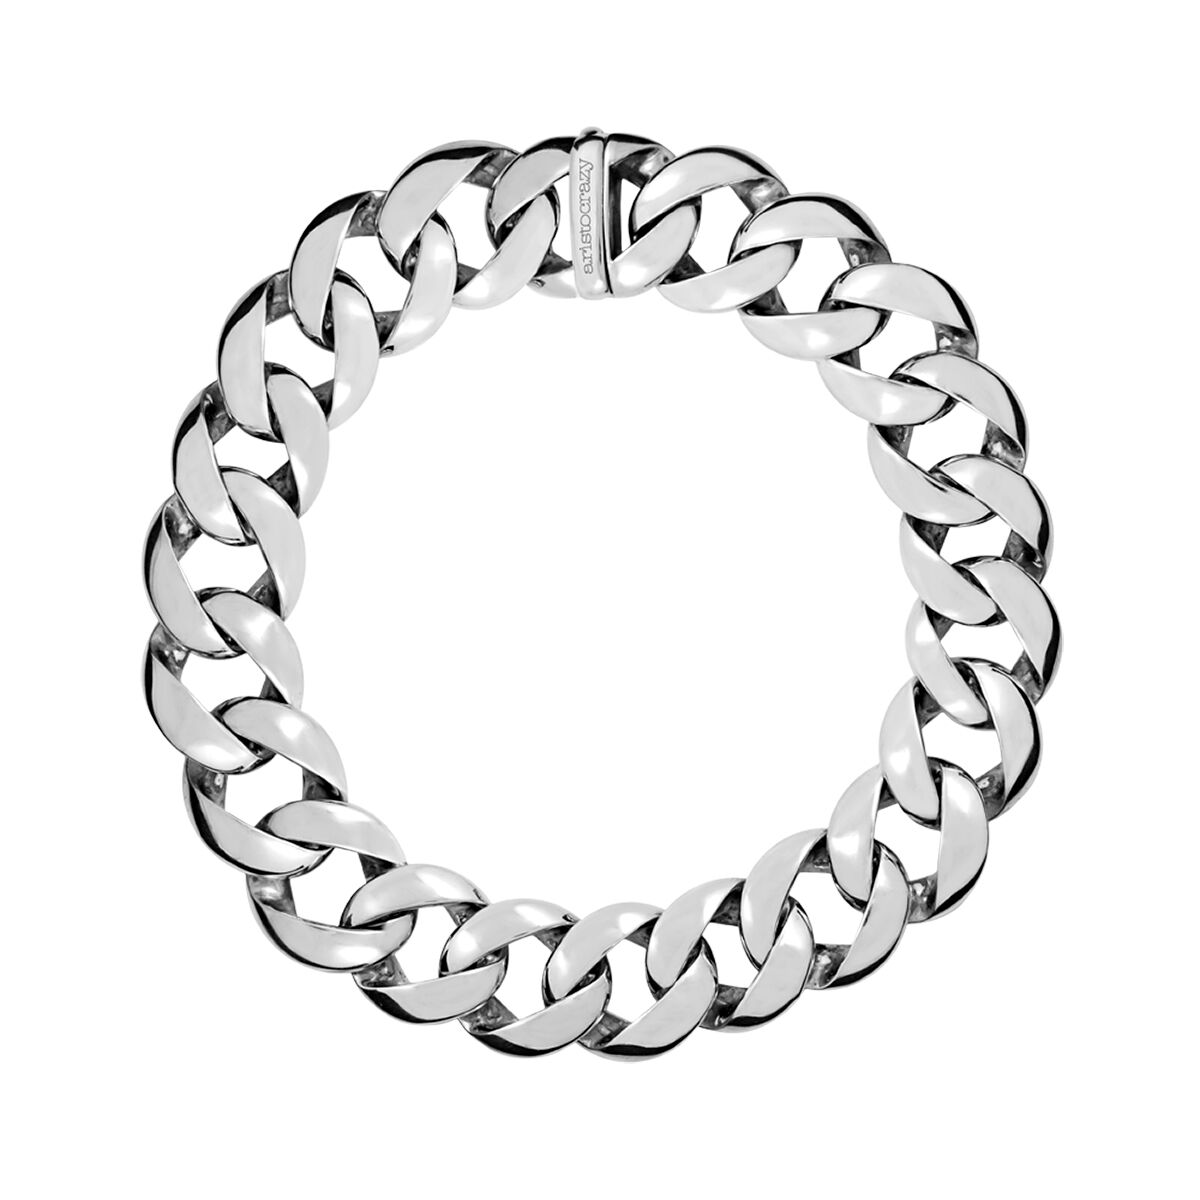 Maxi silver link necklace , J00910-01, hi-res